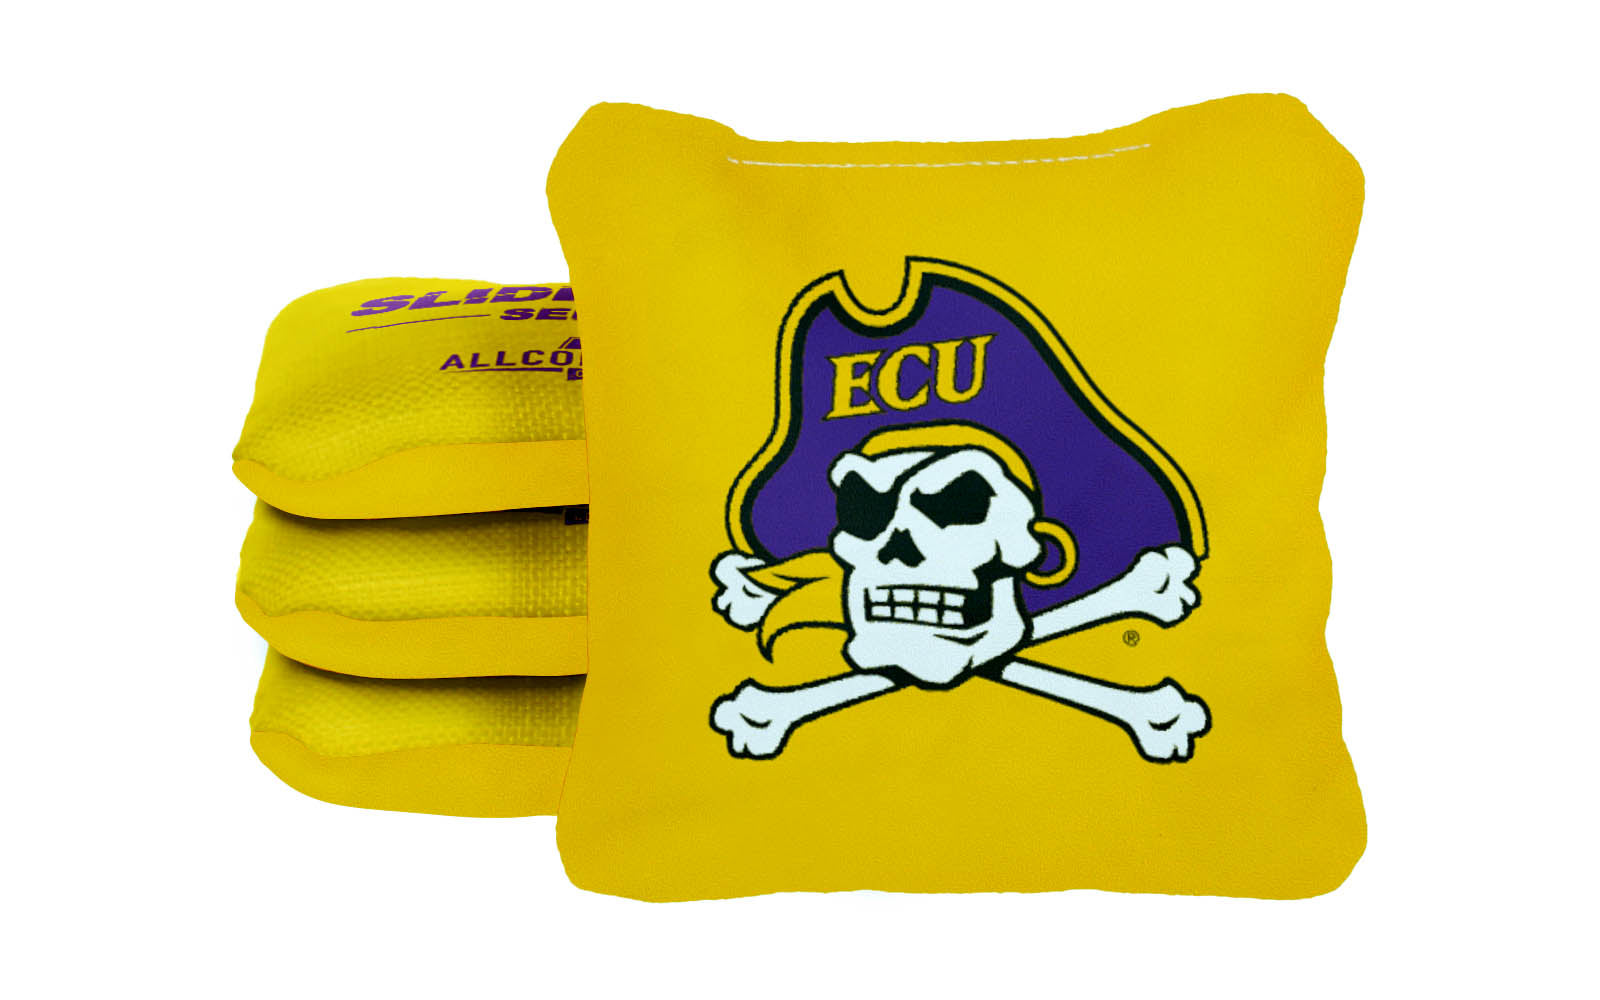 Officially Licensed Collegiate Cornhole Bags - Slide Rite - Set of 4 - East Carolina University